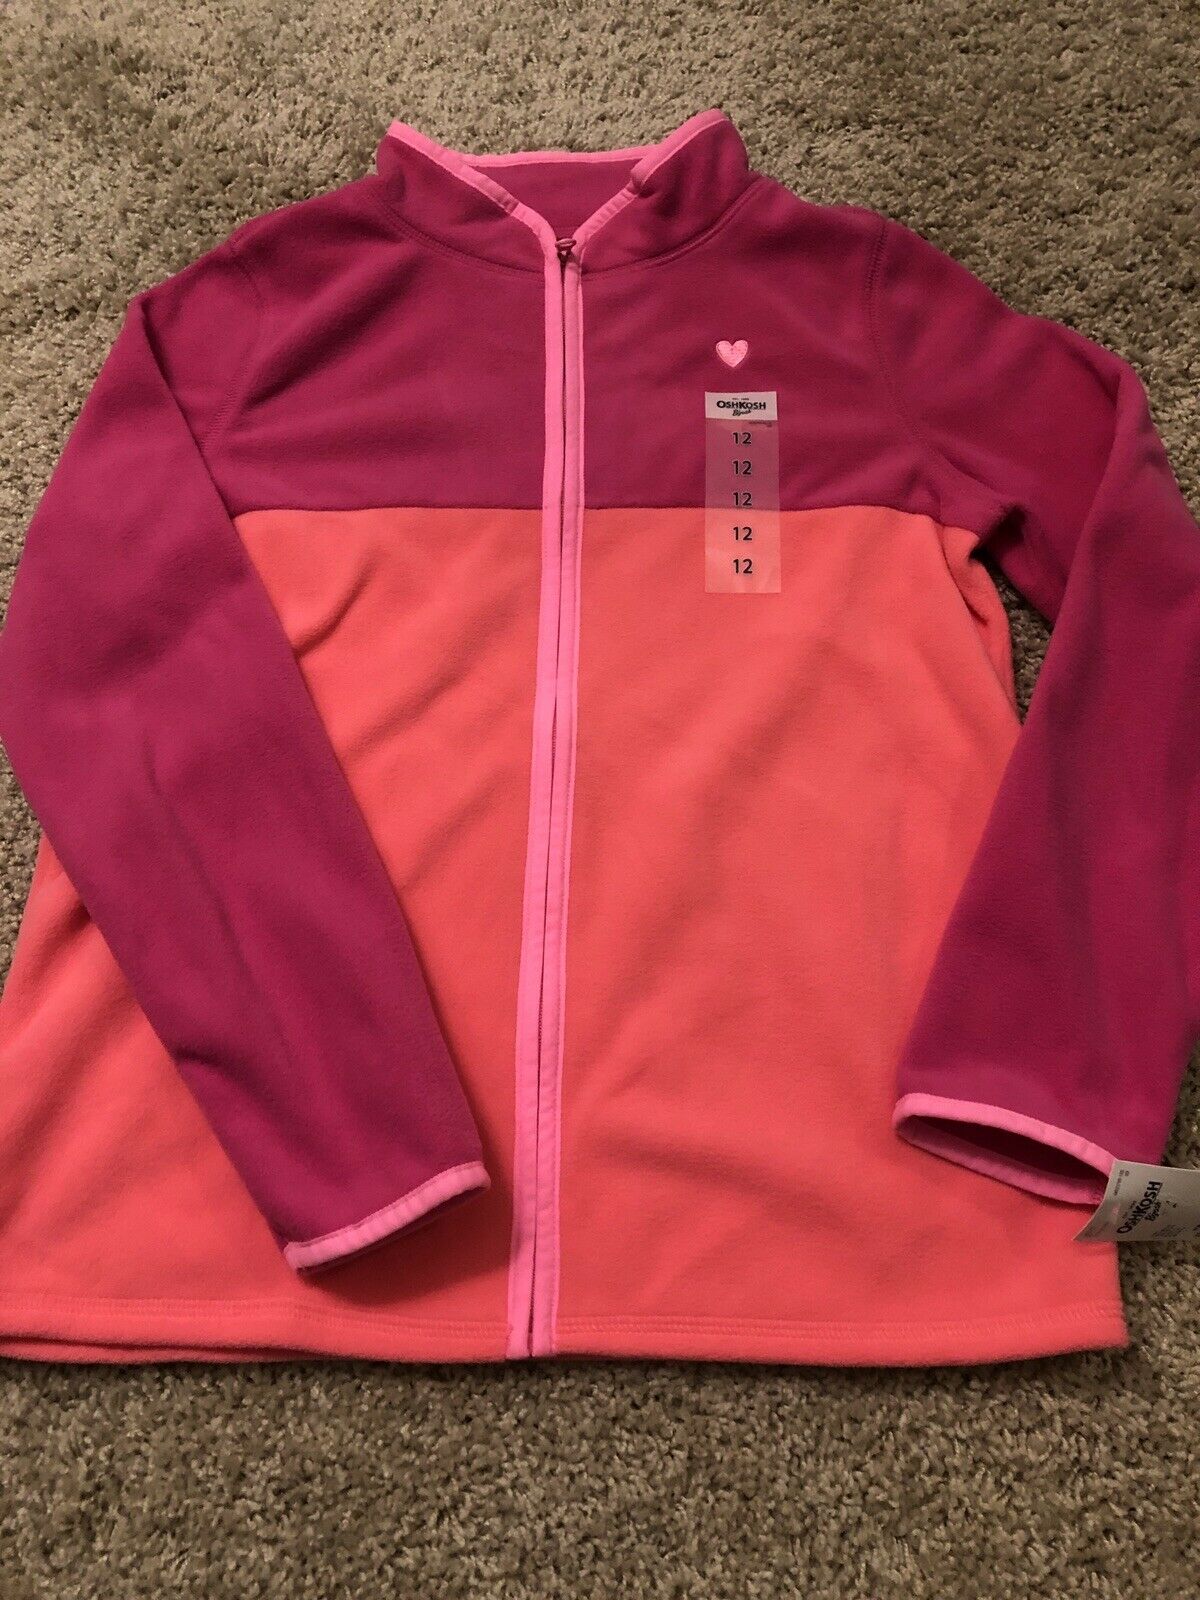 Oshkosh B'gosh Girls Pink Orange Zip Up Fleece Sweatshirt 12 Kids Retails $28